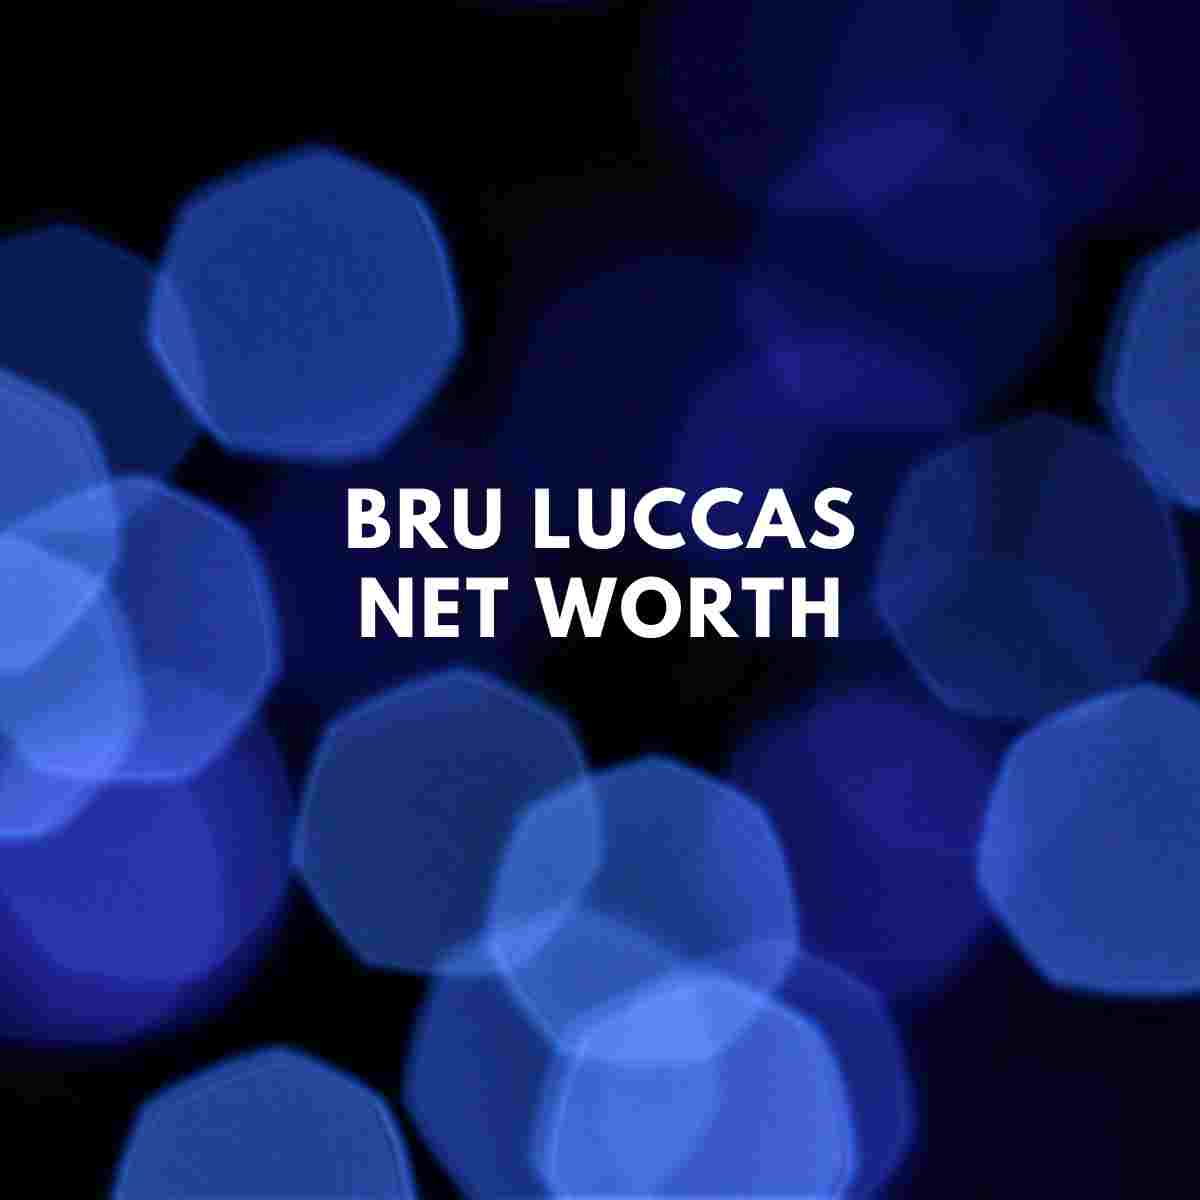 Bru Luccas net worth